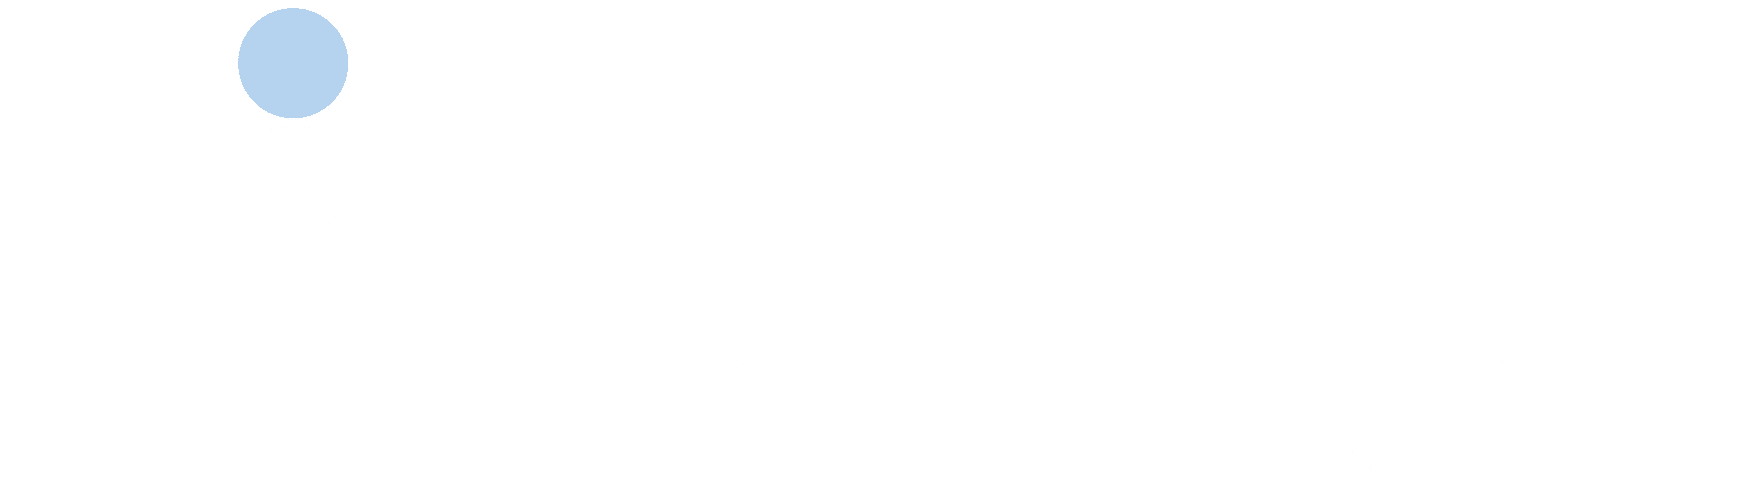 Preferred Cares - A Care Options for Kids Company Logo (1)